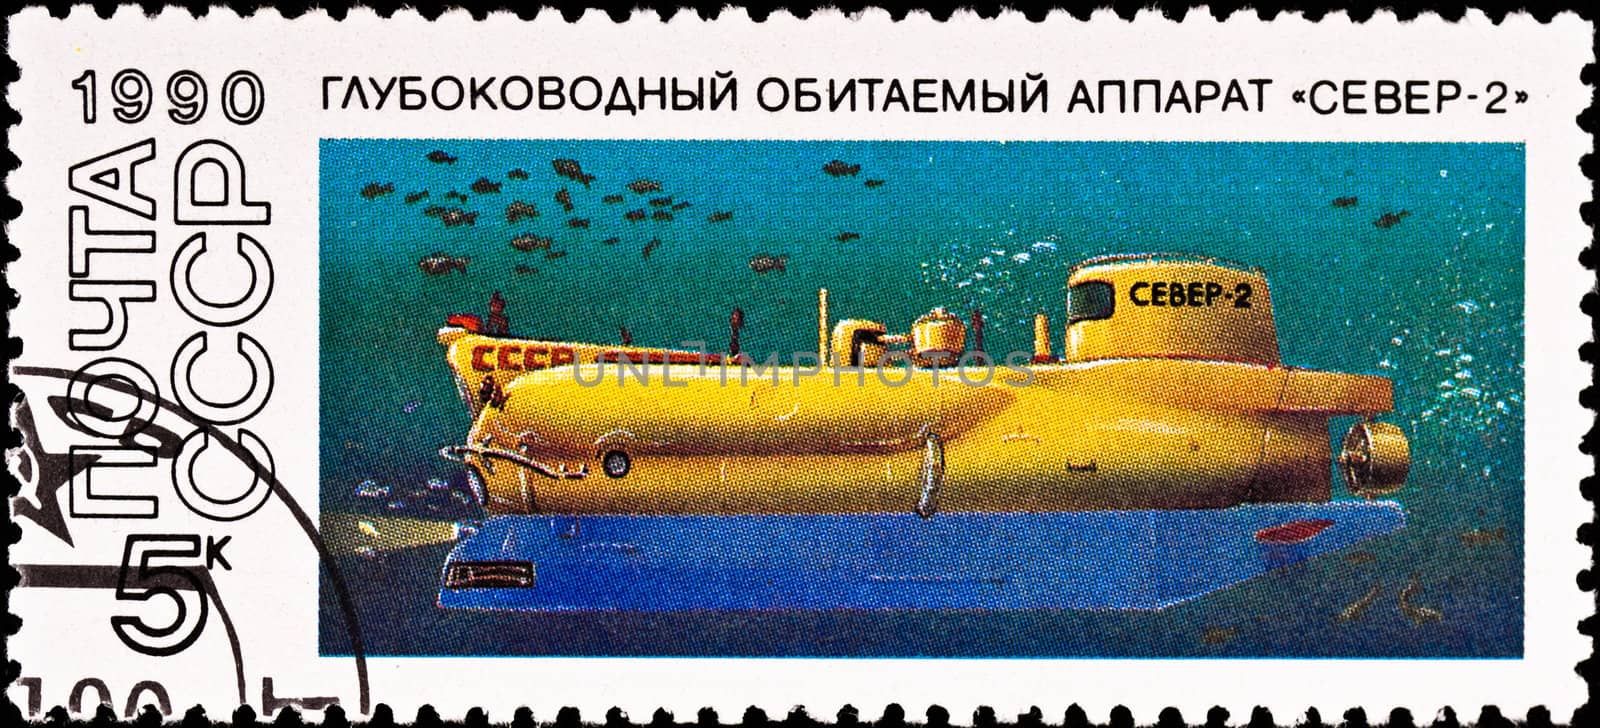 postage stamp shows submarine "North-2" by petr_malyshev